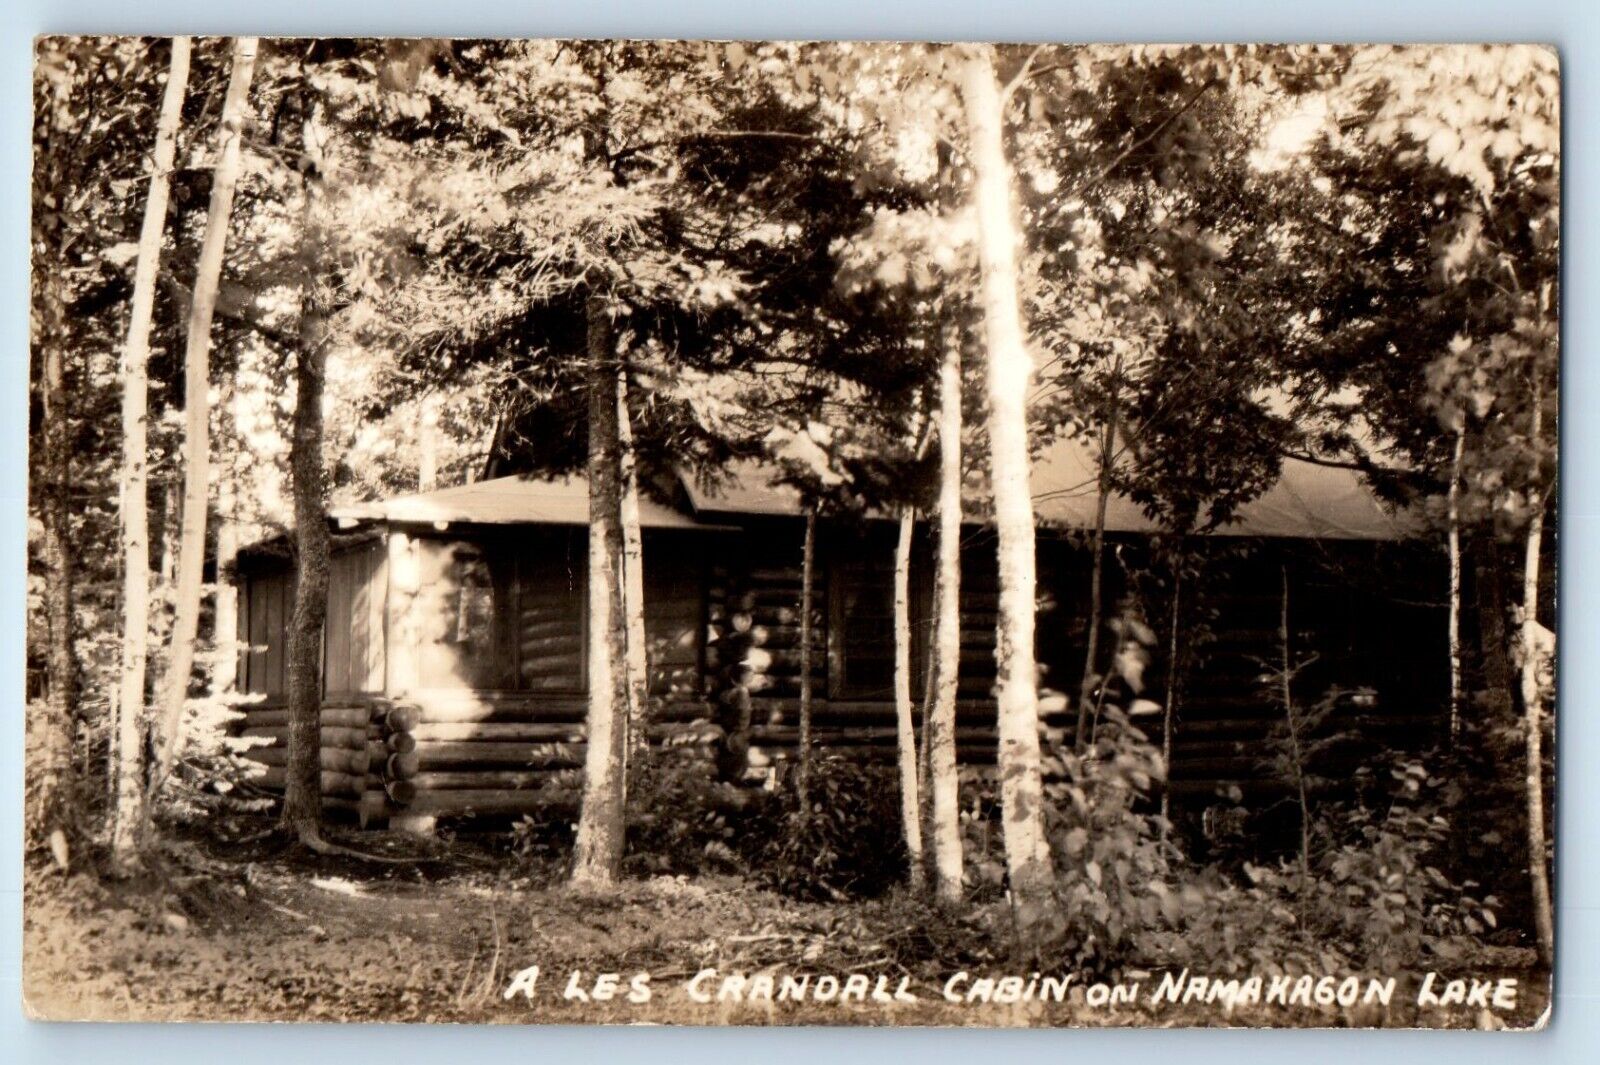 Wisconsin WI Postcard RPPC Photo A Les Crandall Cabin On Namakagon Lake c1940's